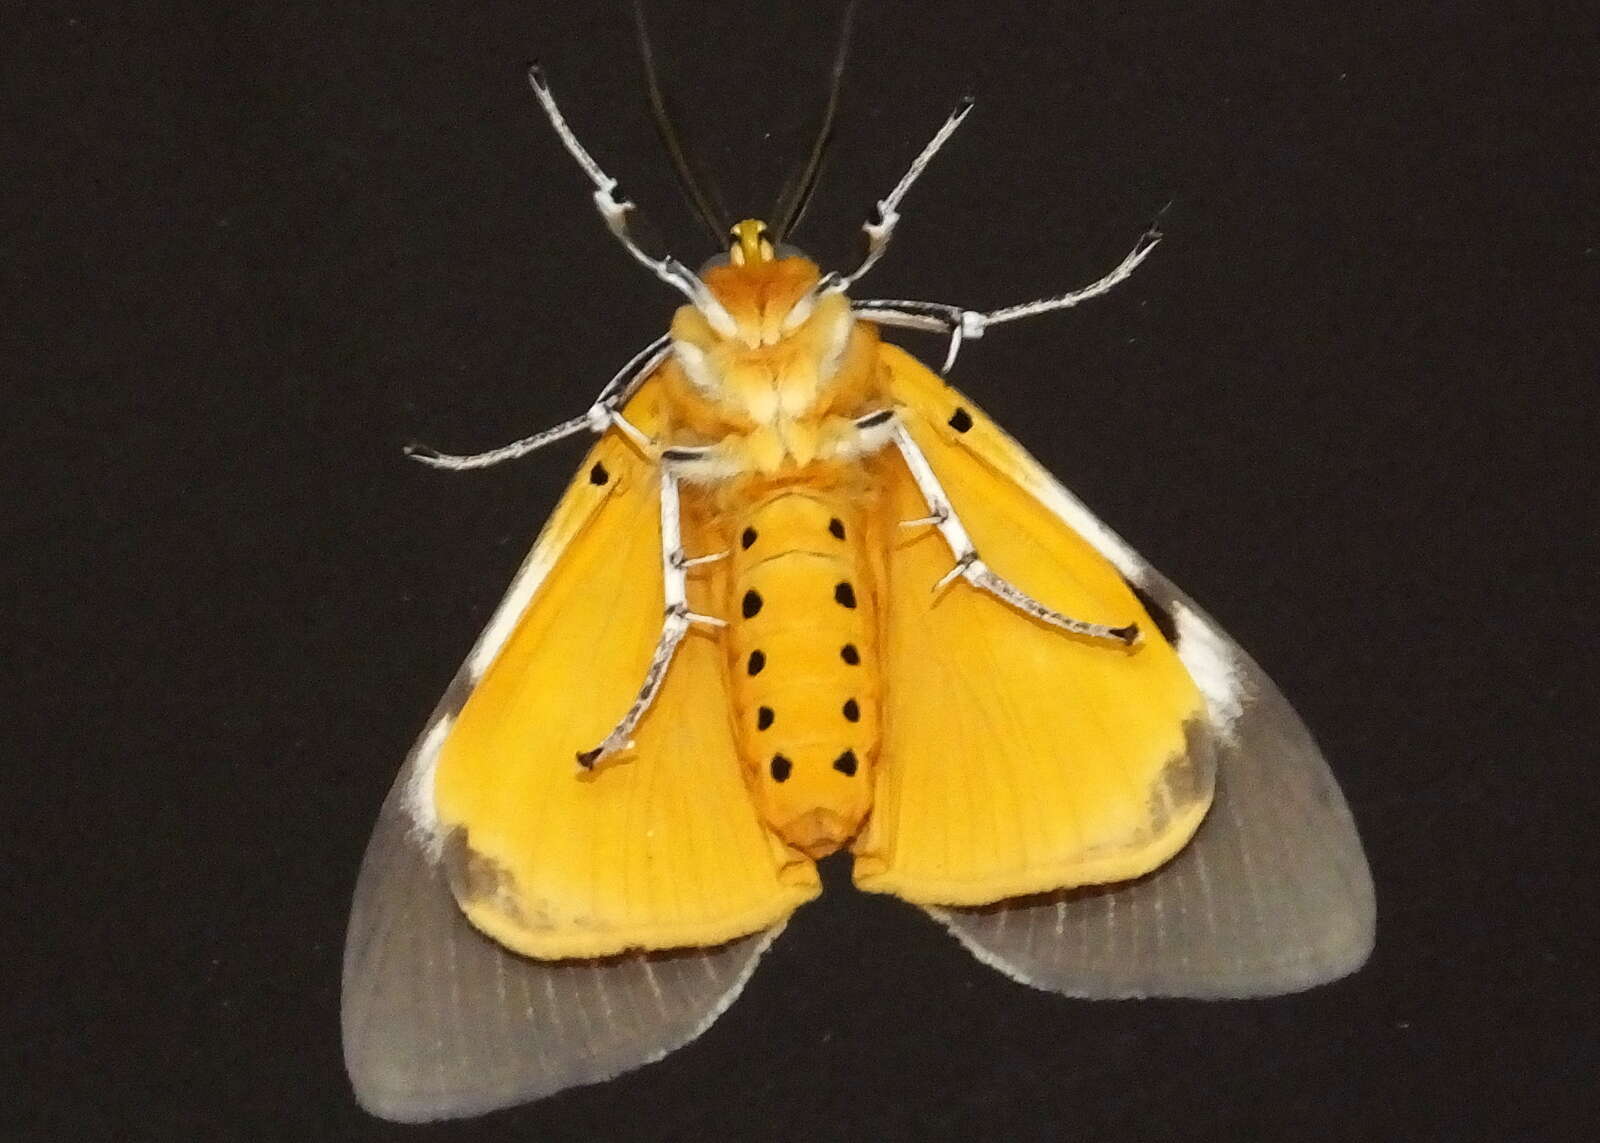 Image of Asota speciosa Drury 1773